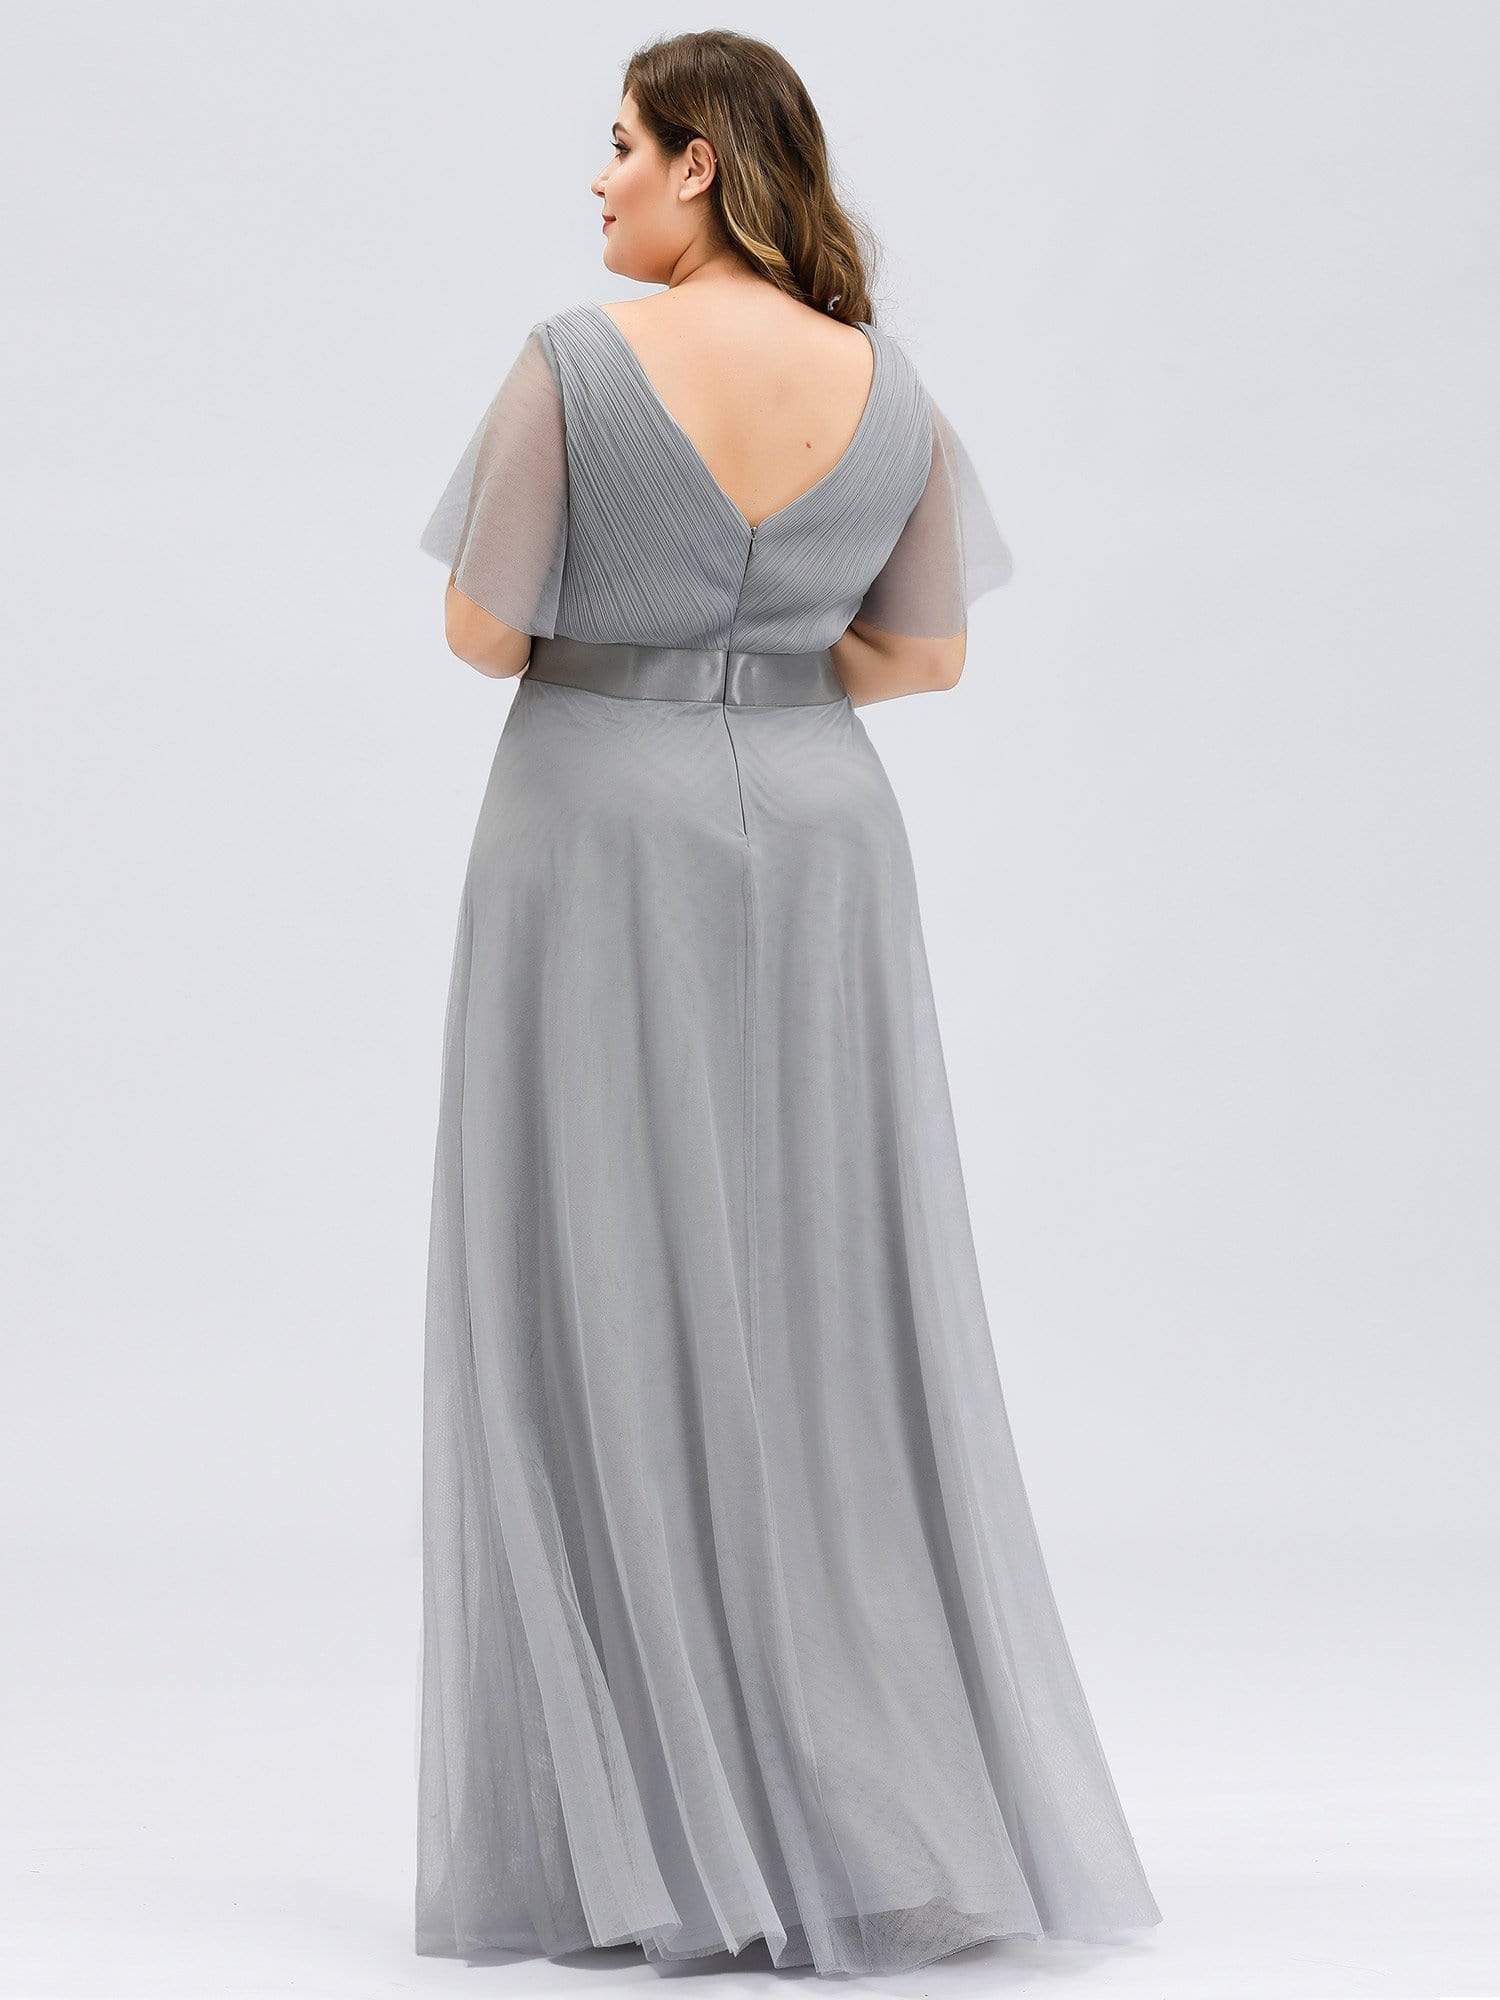 Women's Floor-Length Plus Size Bridesmaid Dress with Short Sleeve